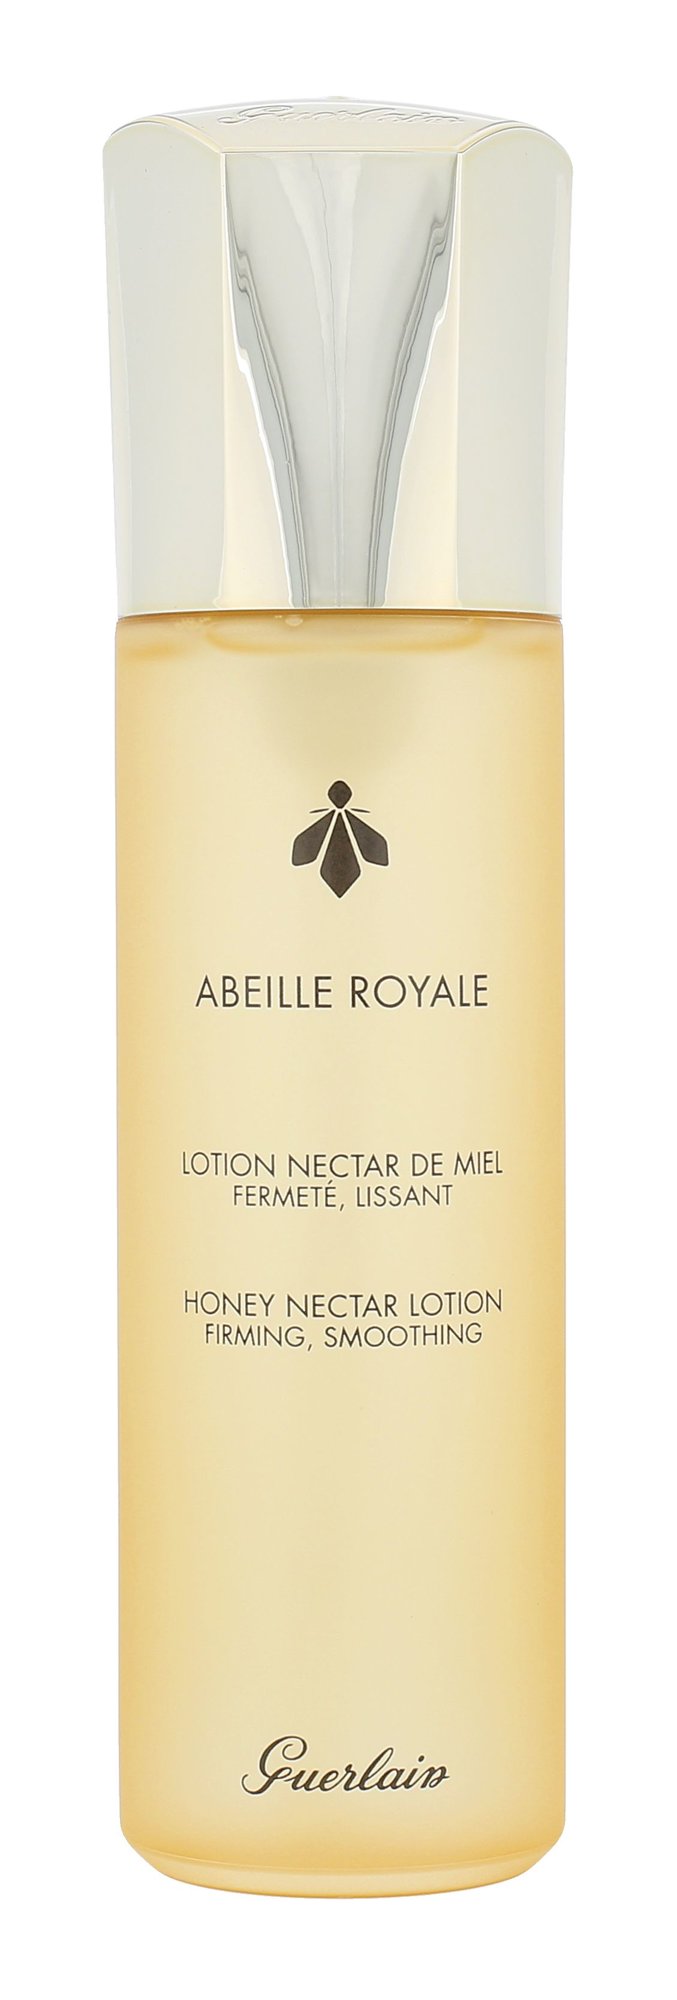 Guerlain Abeille Royale Honey Nectar Lotion 150ml valomasis vanduo veidui